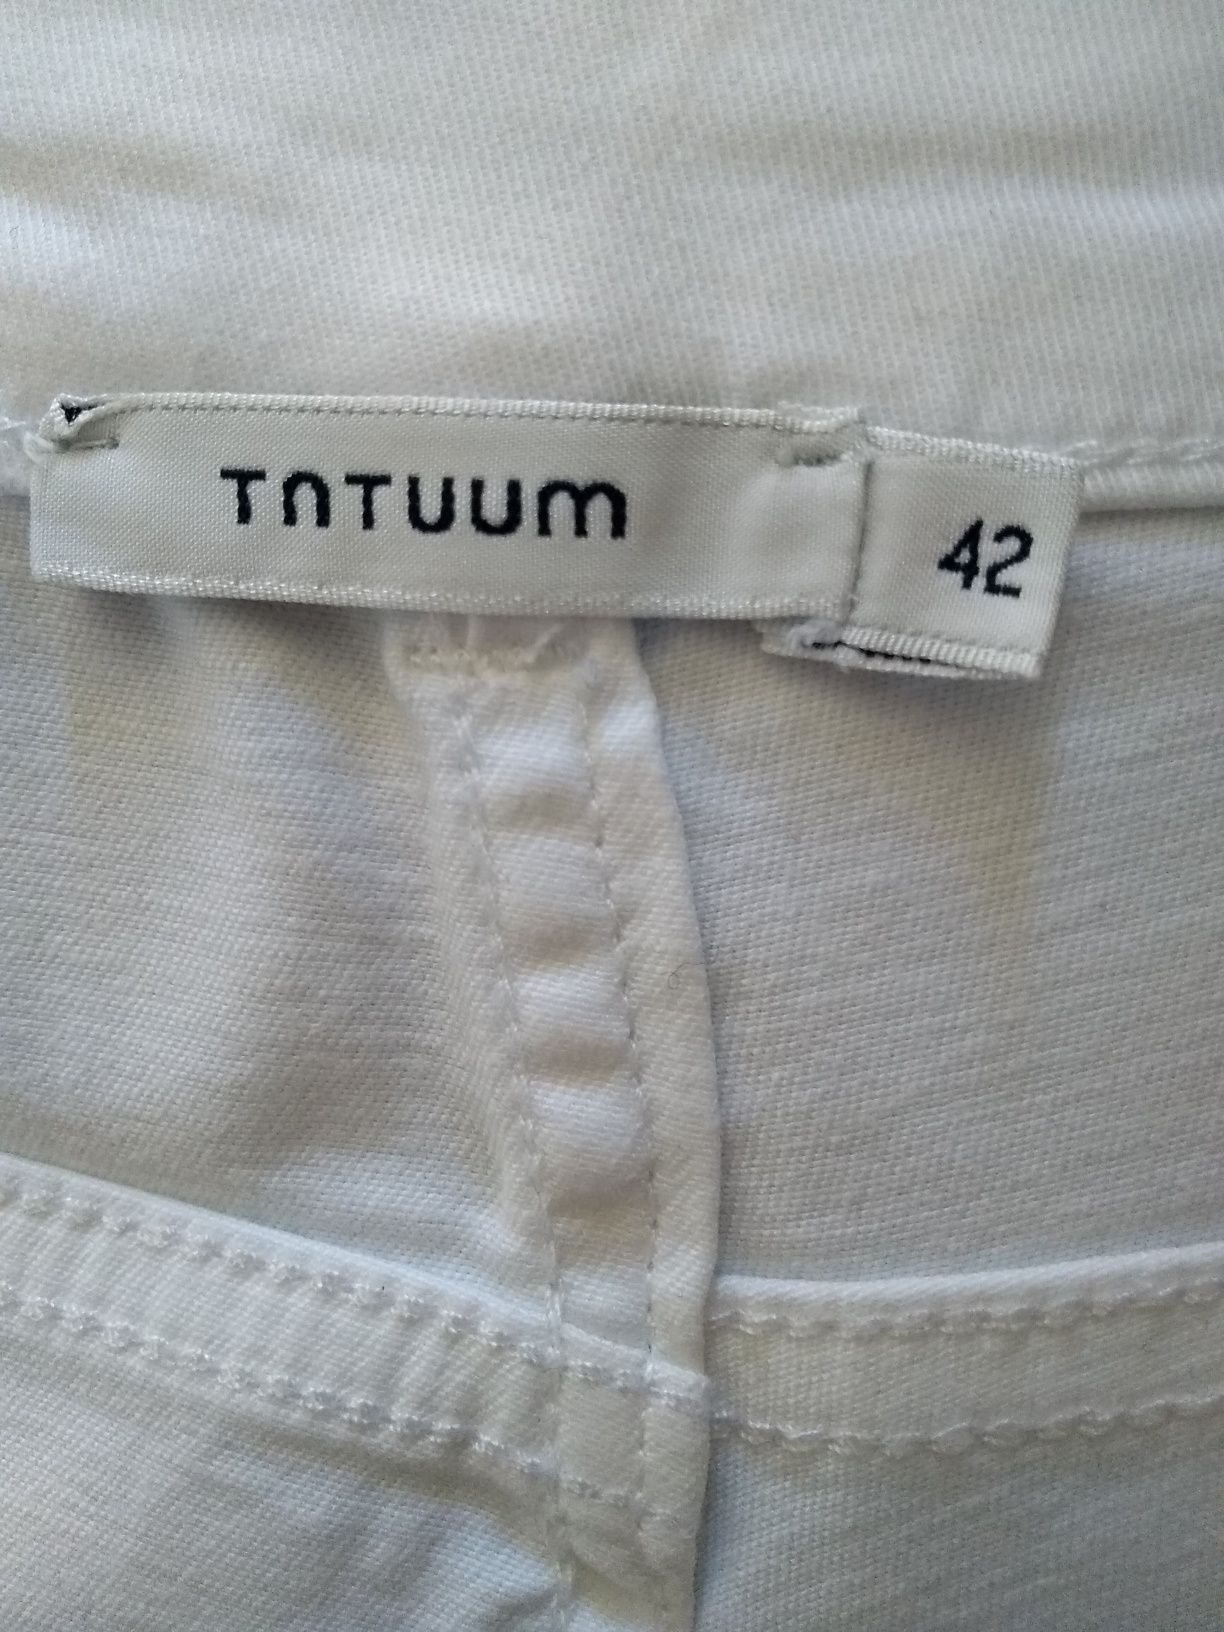 Spodnie Tatuum r.42